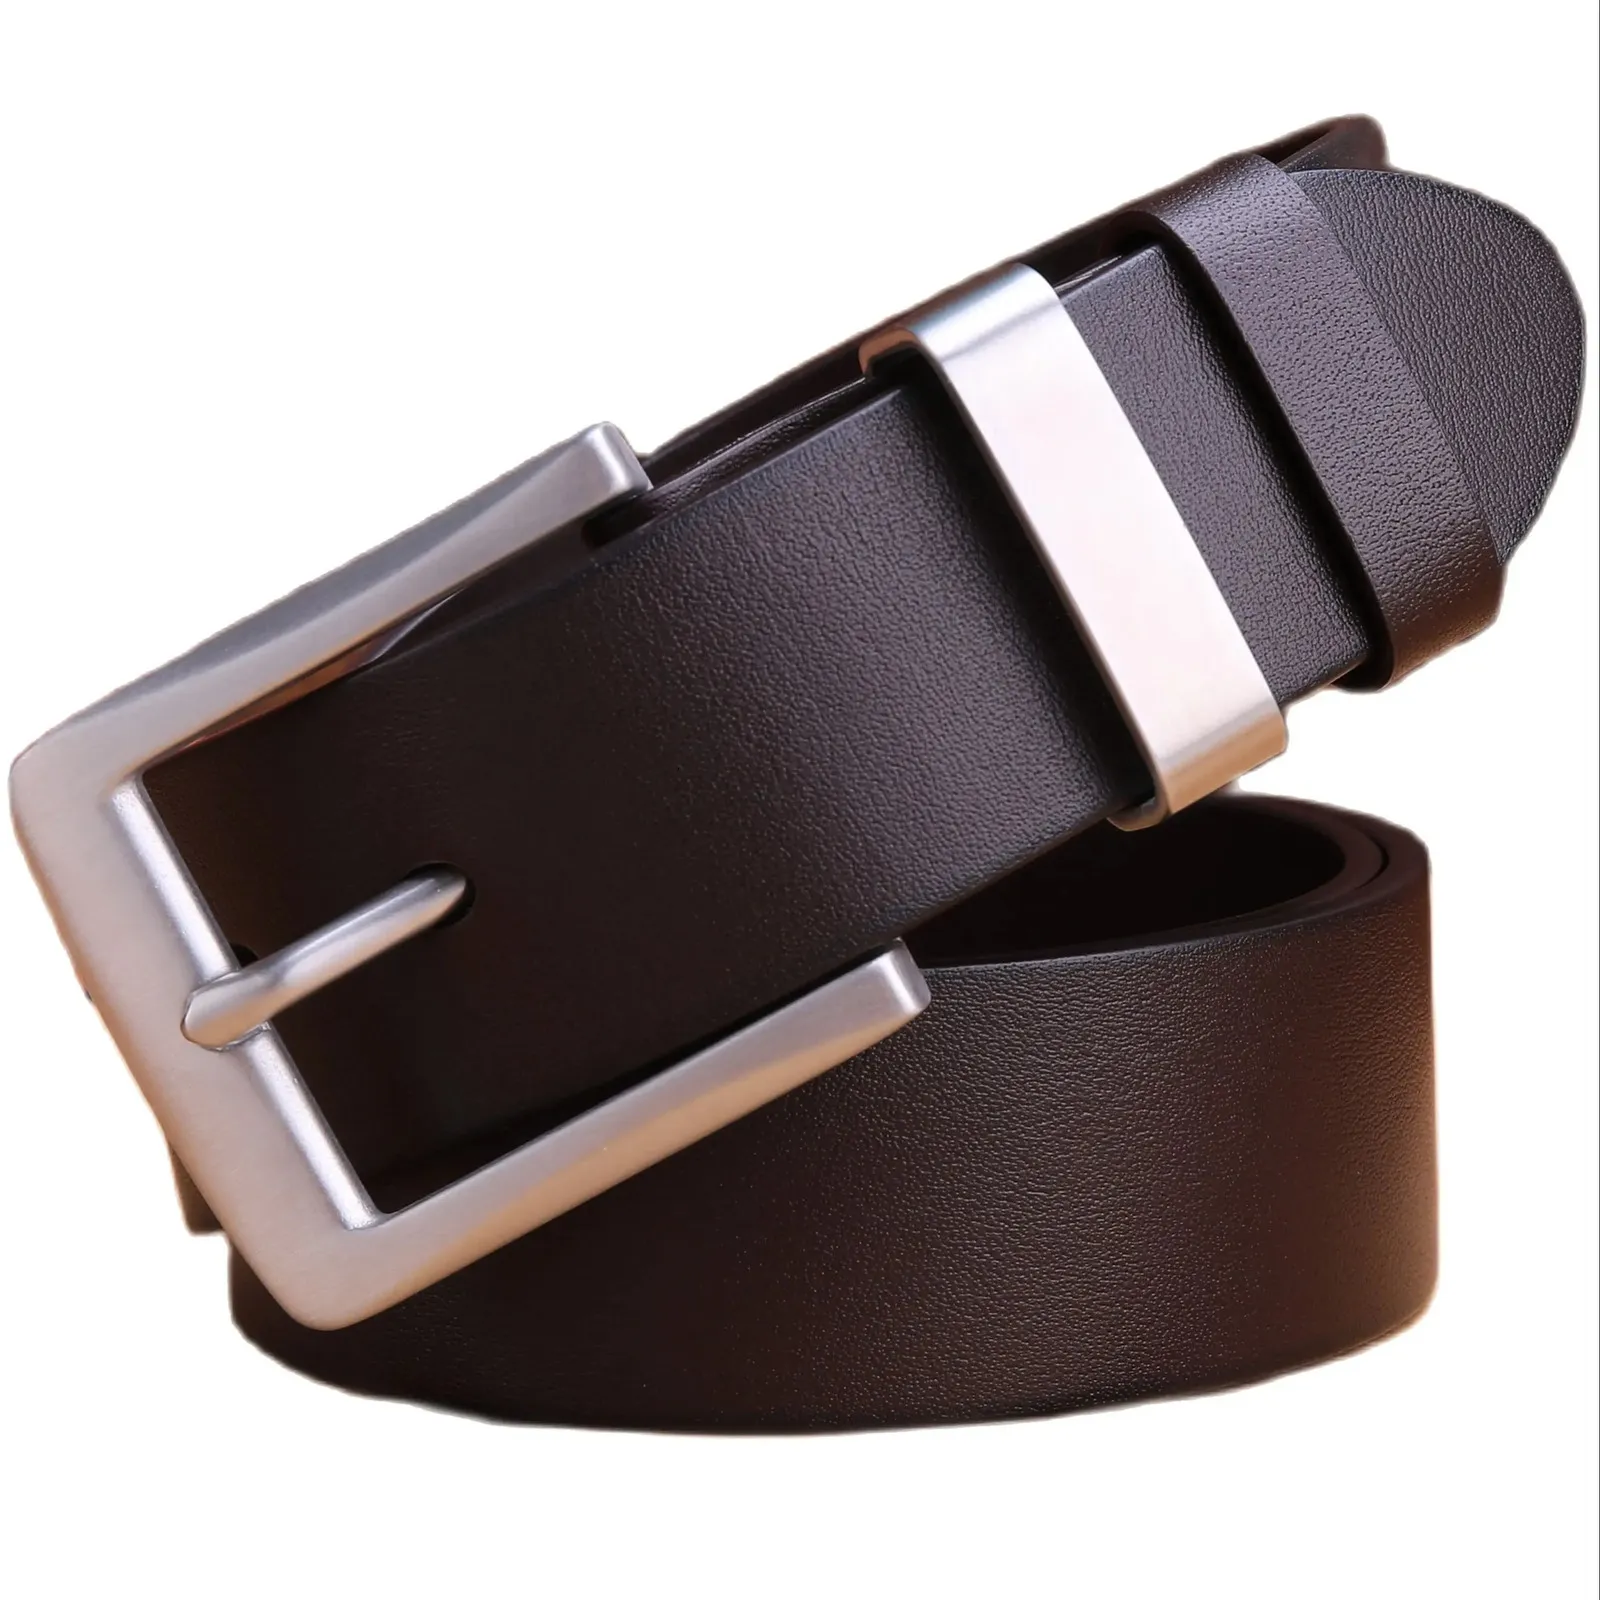 Belts stainless steel buckle strap mens belts luxury full grain cowhide 100% genuine leather formal business real 140cm vetetable tan 231201